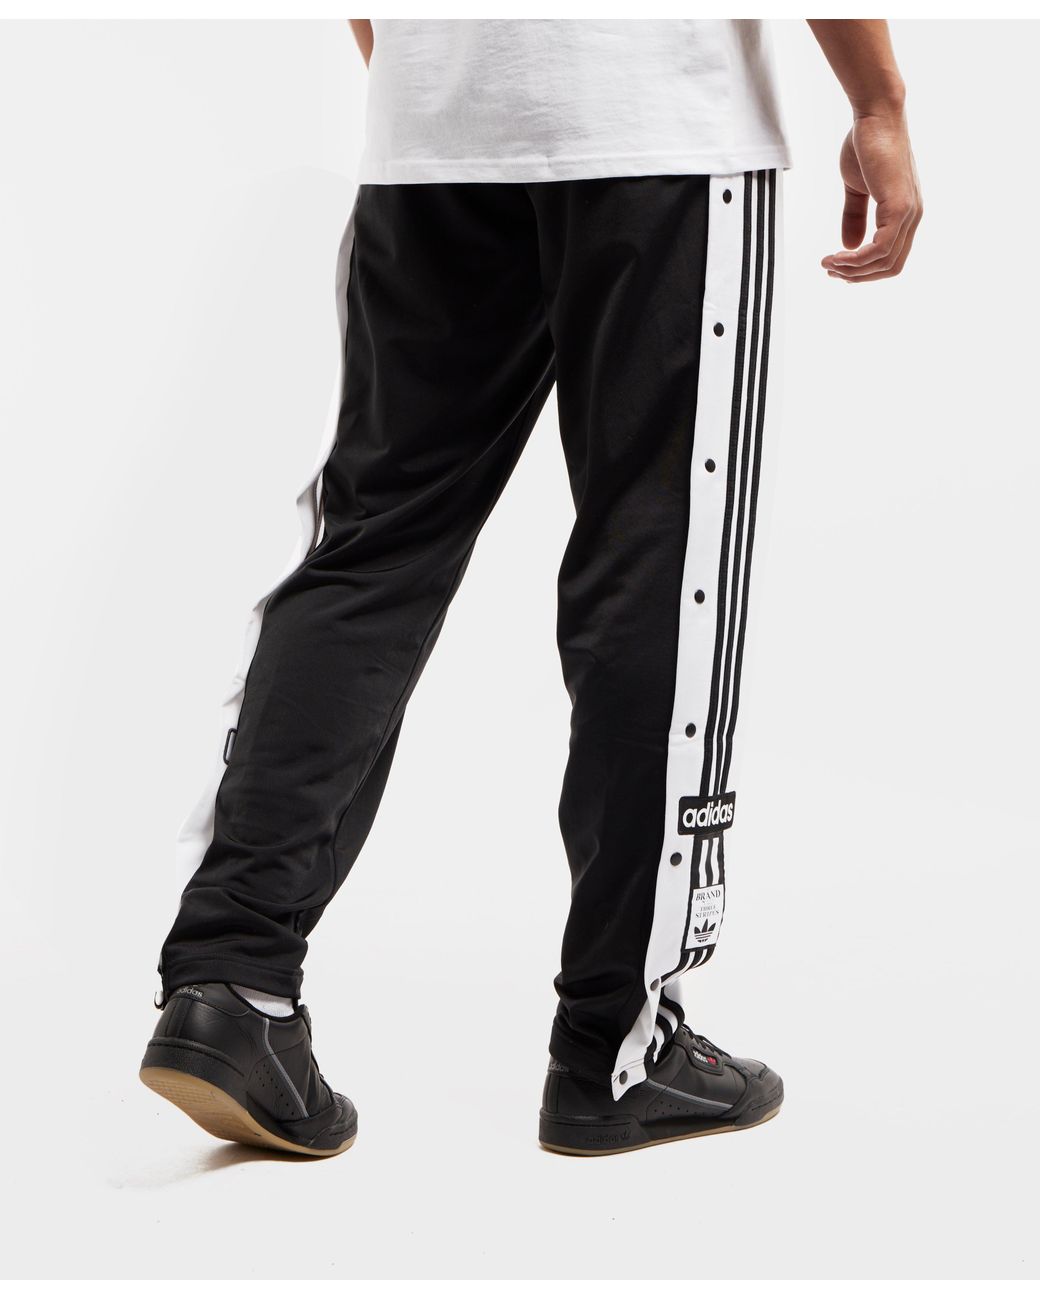 adidas Originals Adi Snap Button Track Pants in Black for Men 